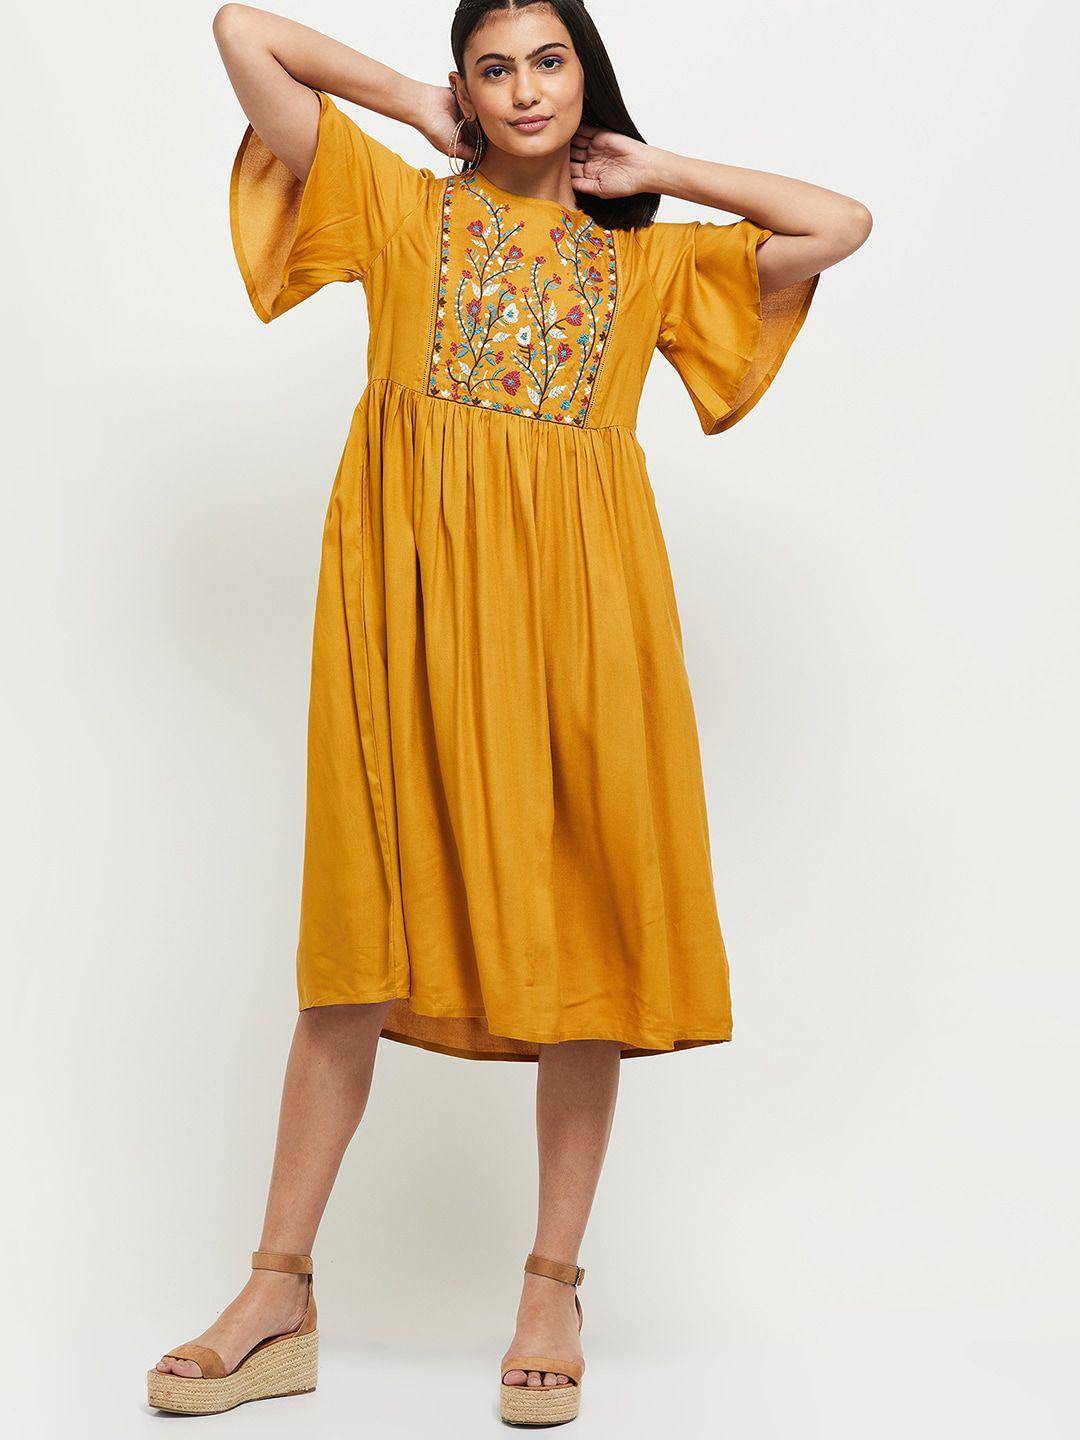 max-mustard-yellow-embroidered-a-line-midi-dress